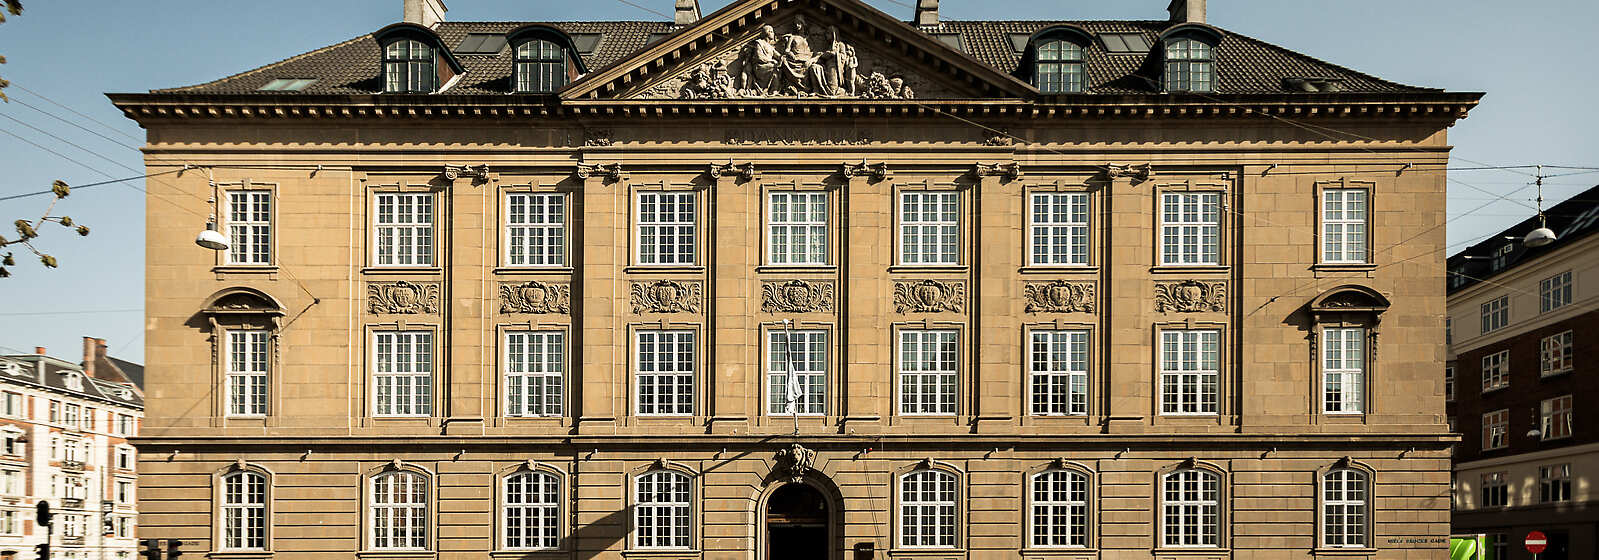 The exterior of Nobis Hotel Copenhagen.